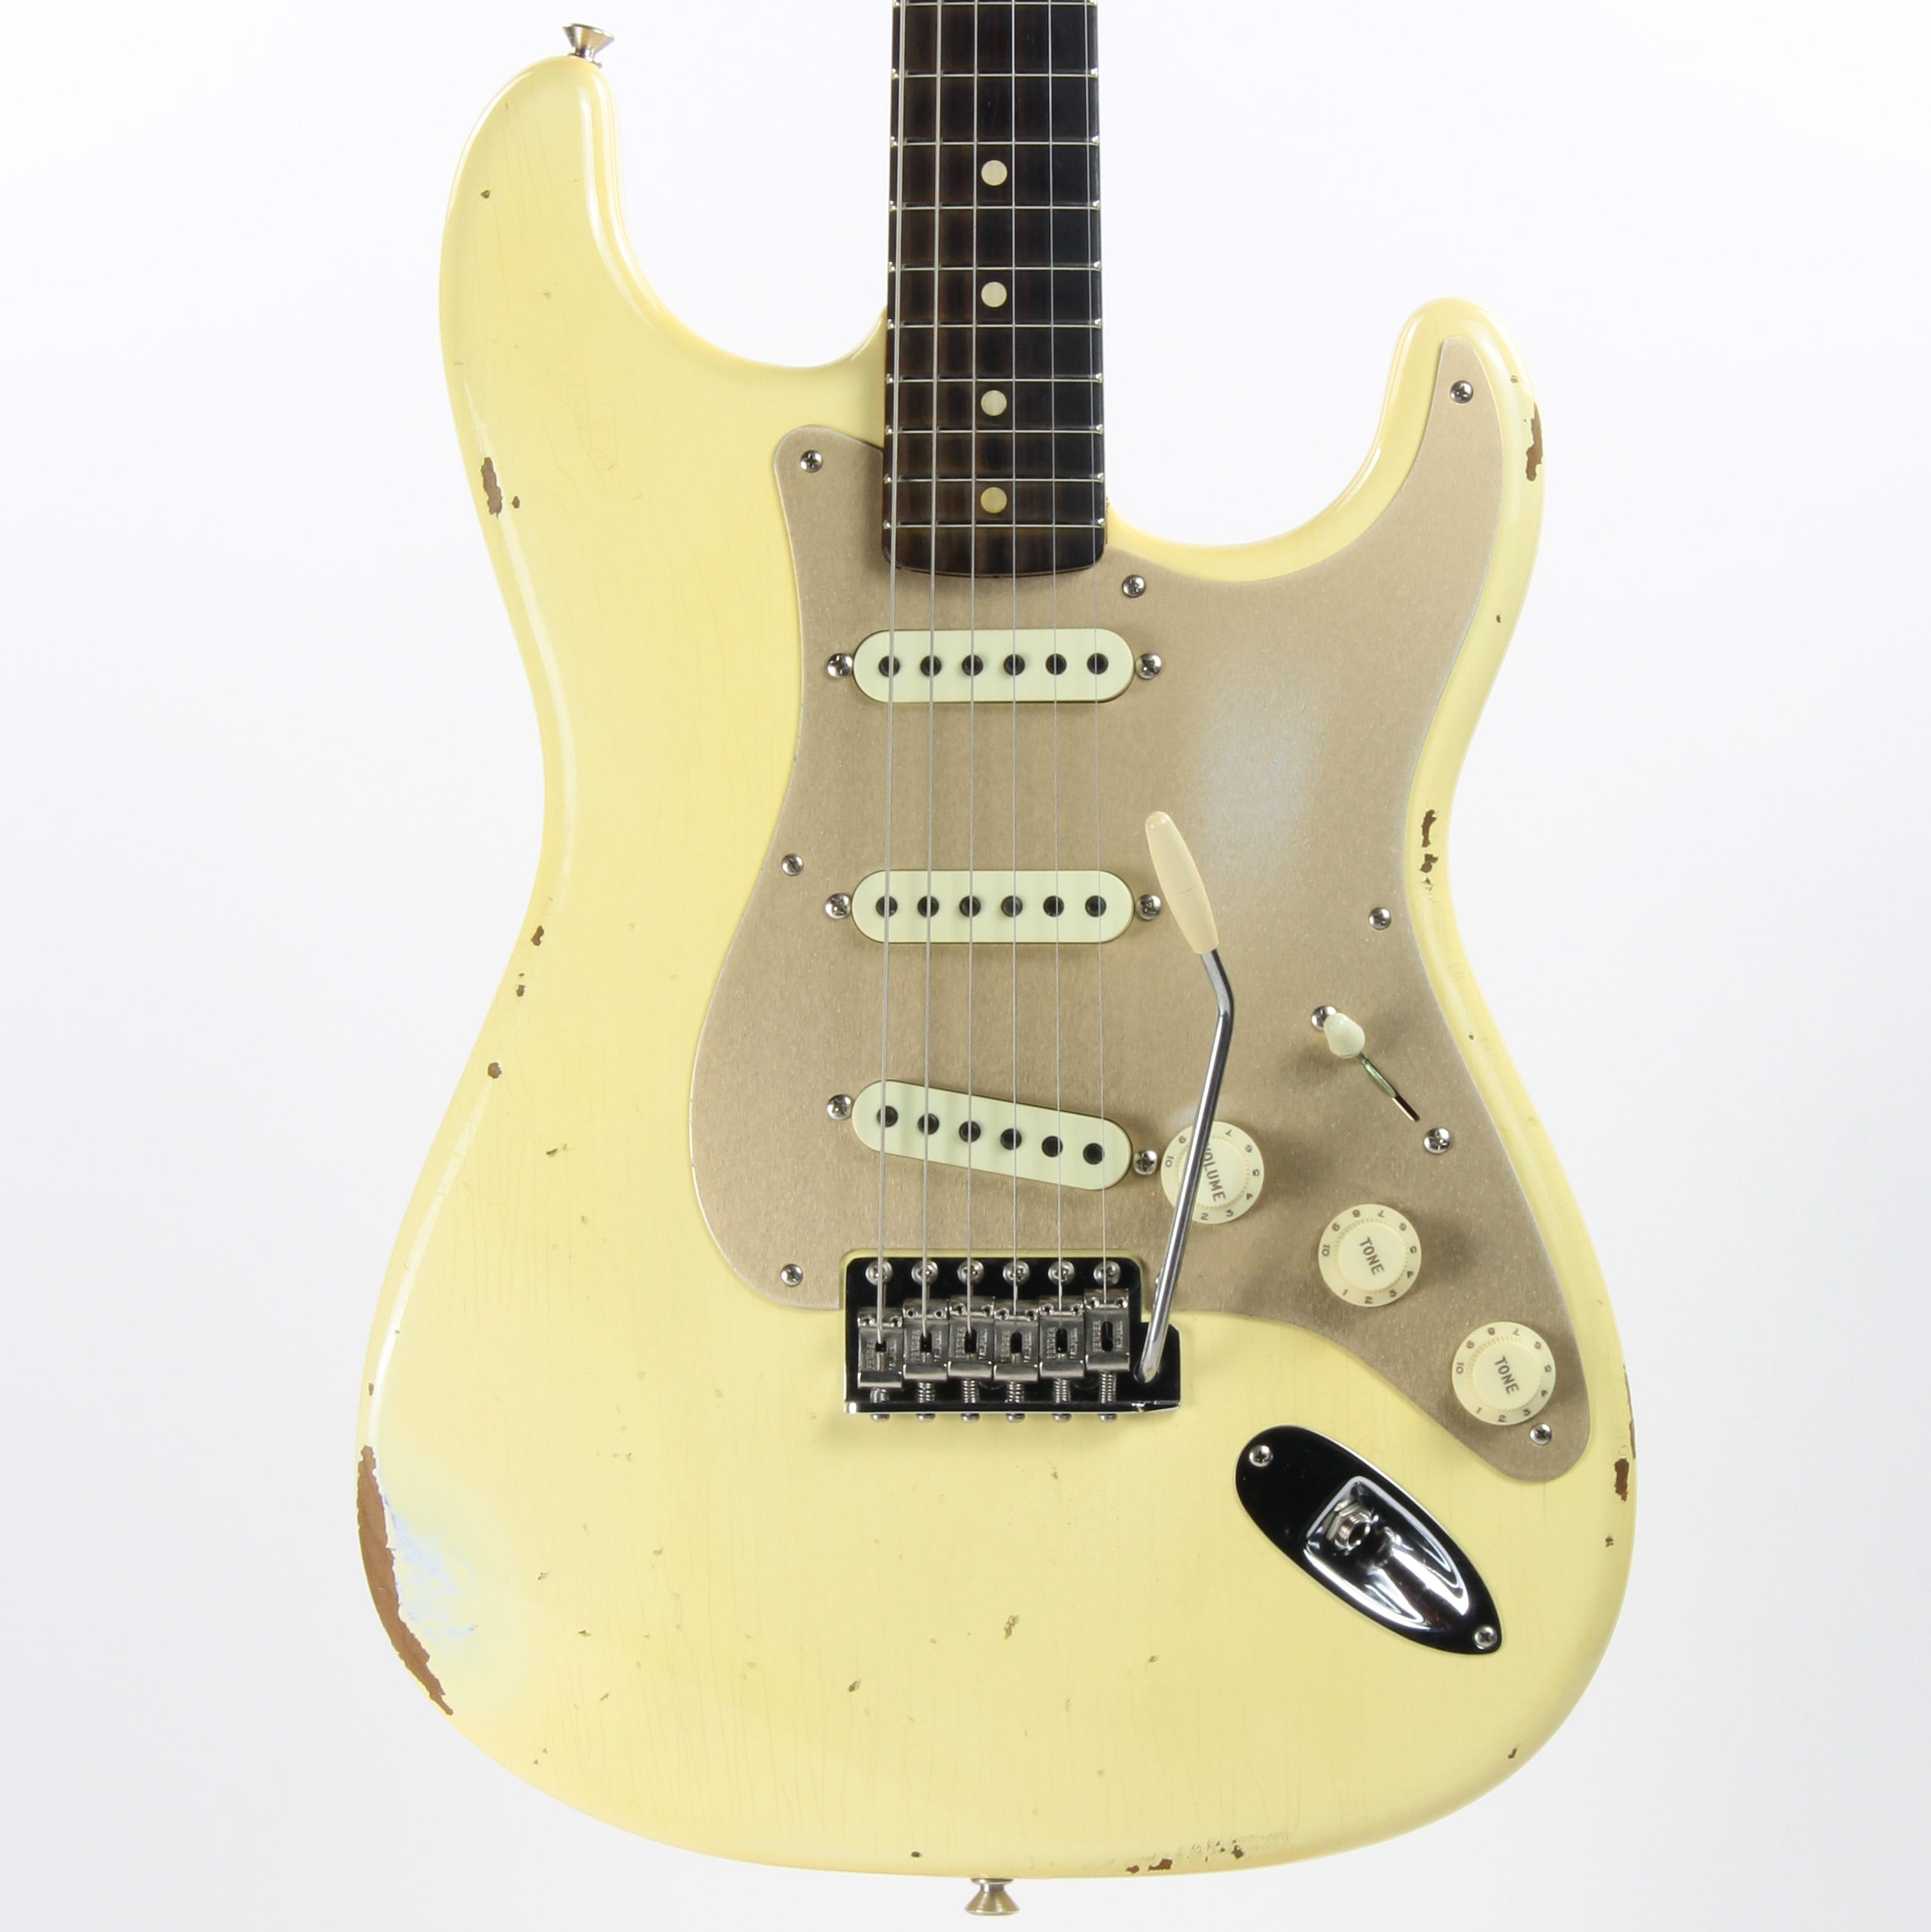 *SOLD*  2017 NAMM Fender Custom Shop Relic 30th Anniversary 1960 Roasted Stratocaster LTD Aged Vintage White Birdseye Neck